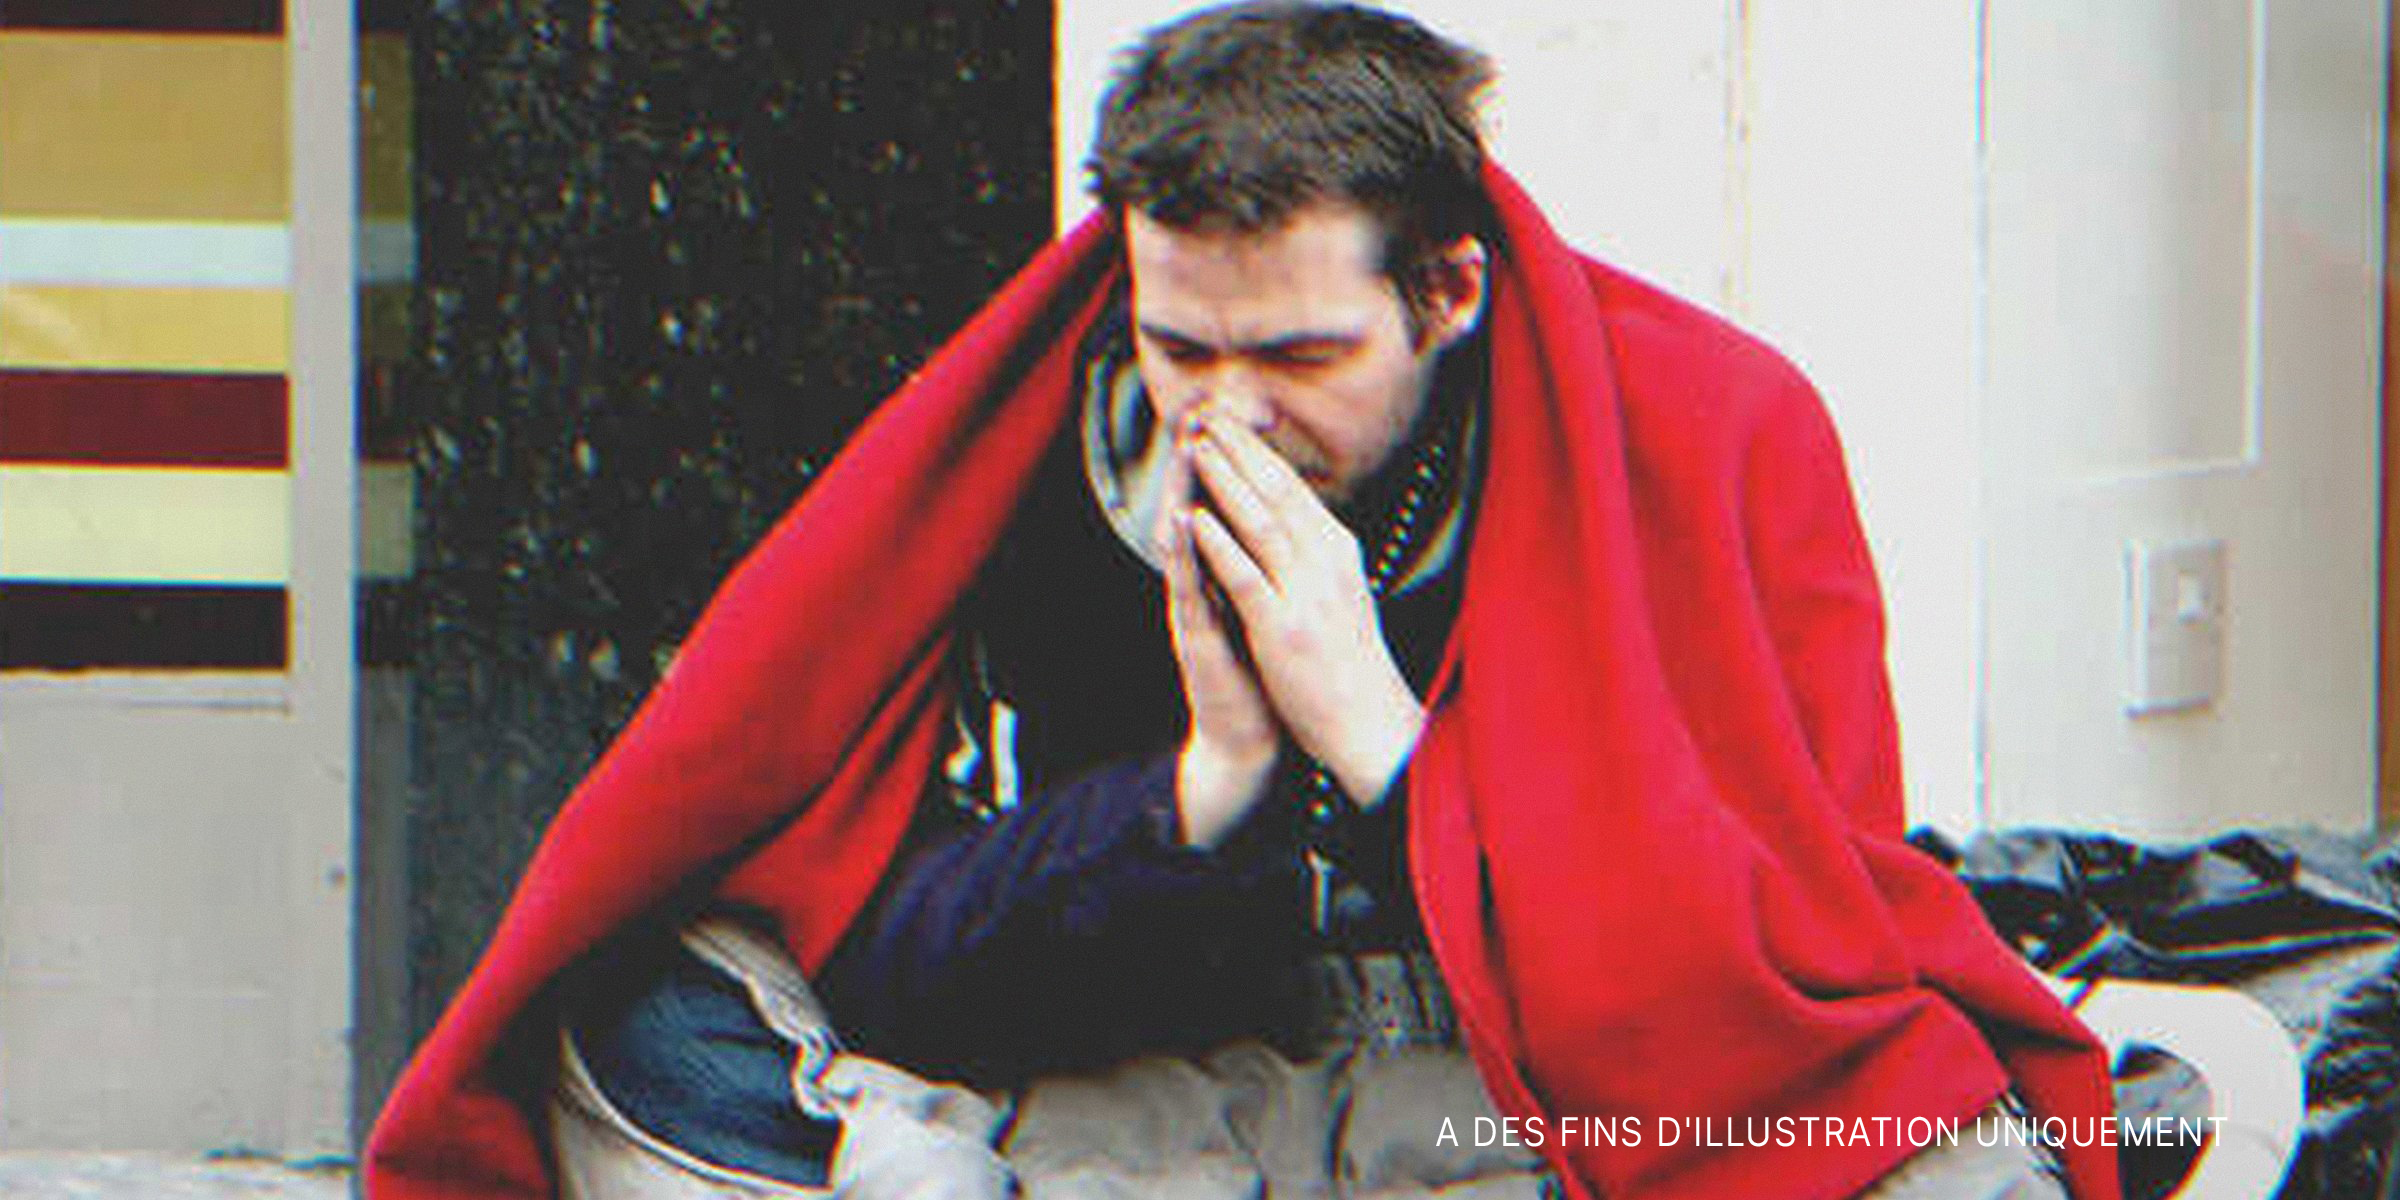 Homme triste dans la rue | Source : Flickr/garryknight (CC BY 2.0)